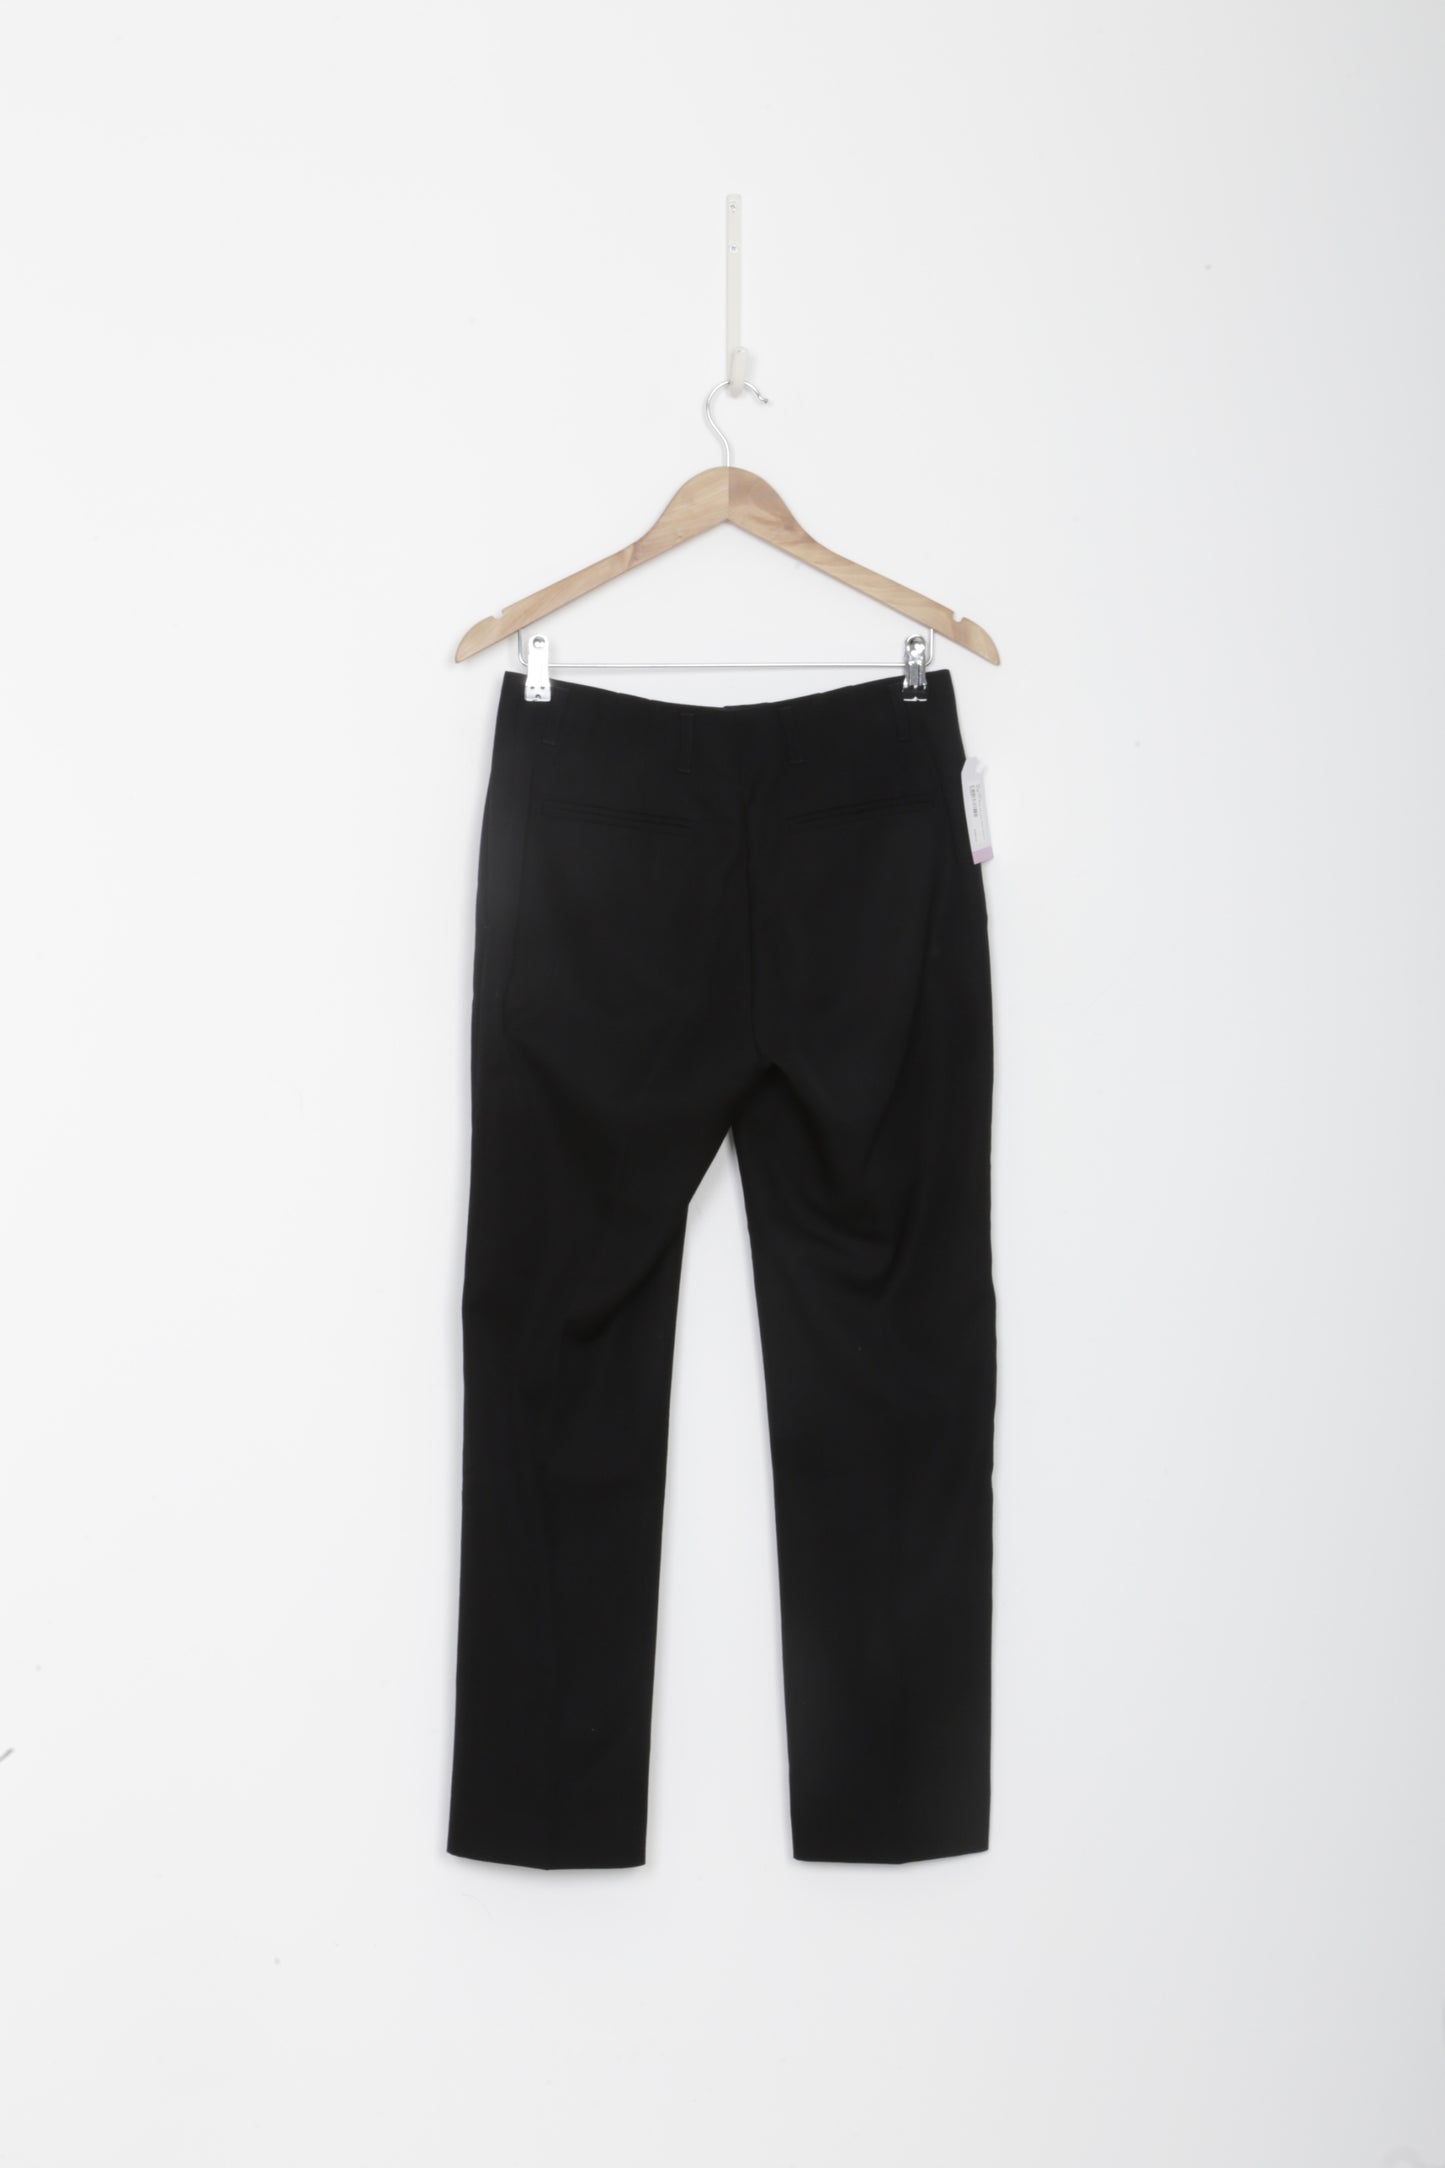 Dries Van Noten Womens Black Pants Size W 36